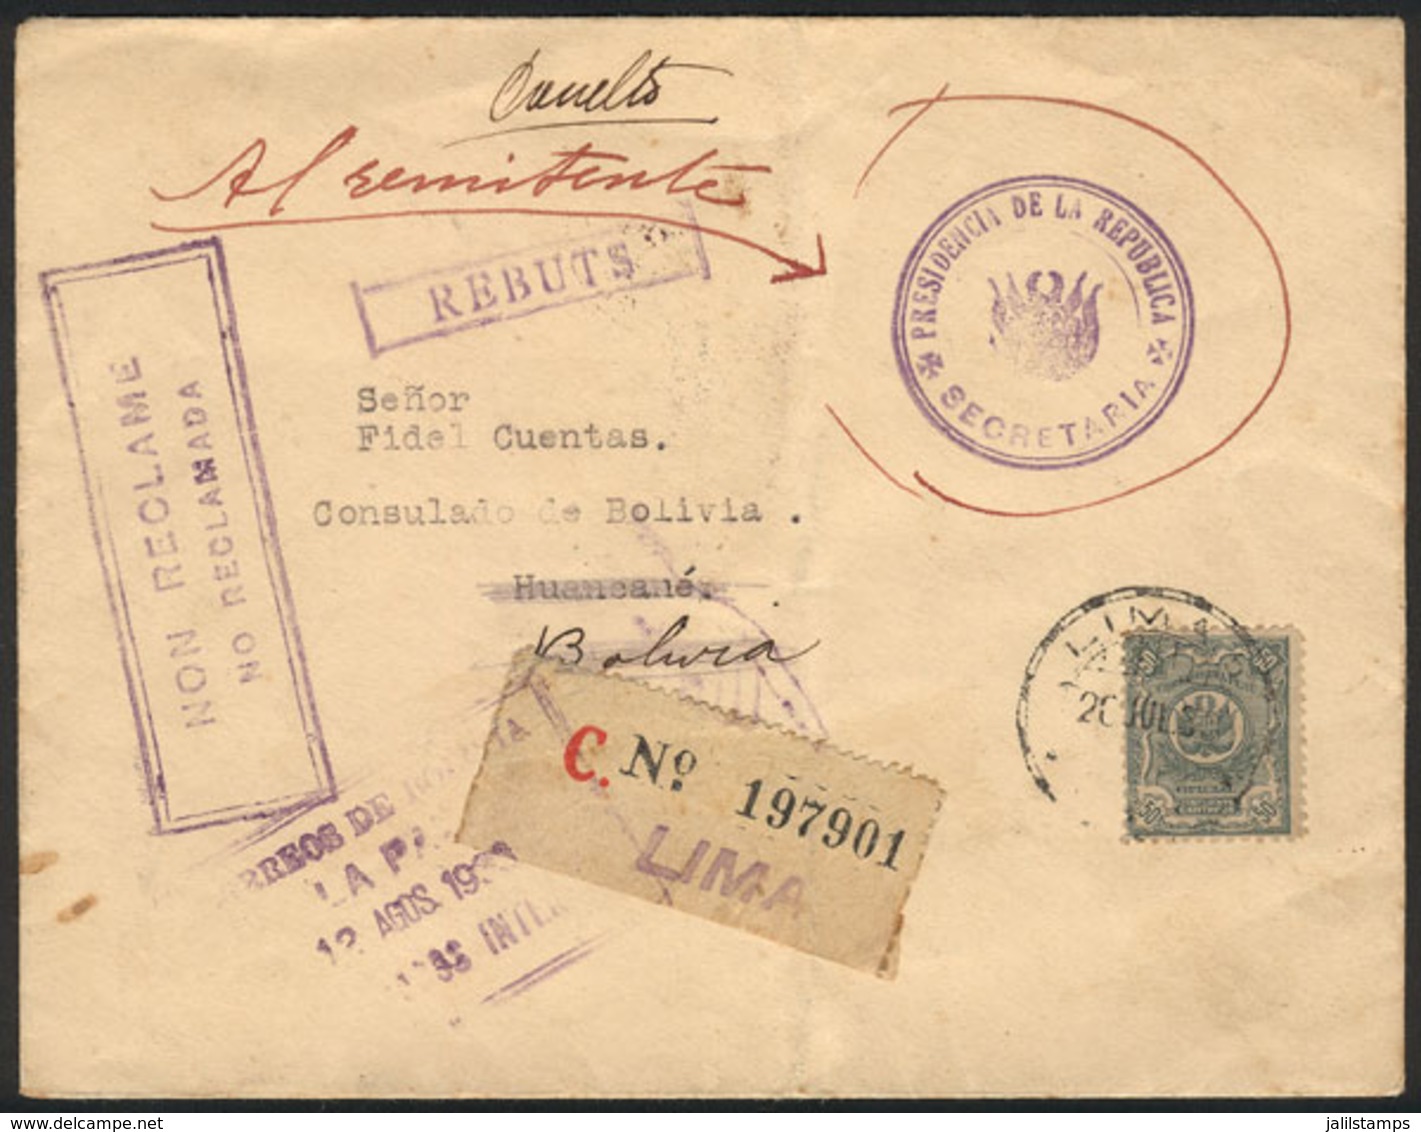 PERU: Registered Cover Franked By Sc.O30, From Lima To Huancané (Bolivia) On 20/JUL/1933 And Returned To Sender, VF Qual - Peru